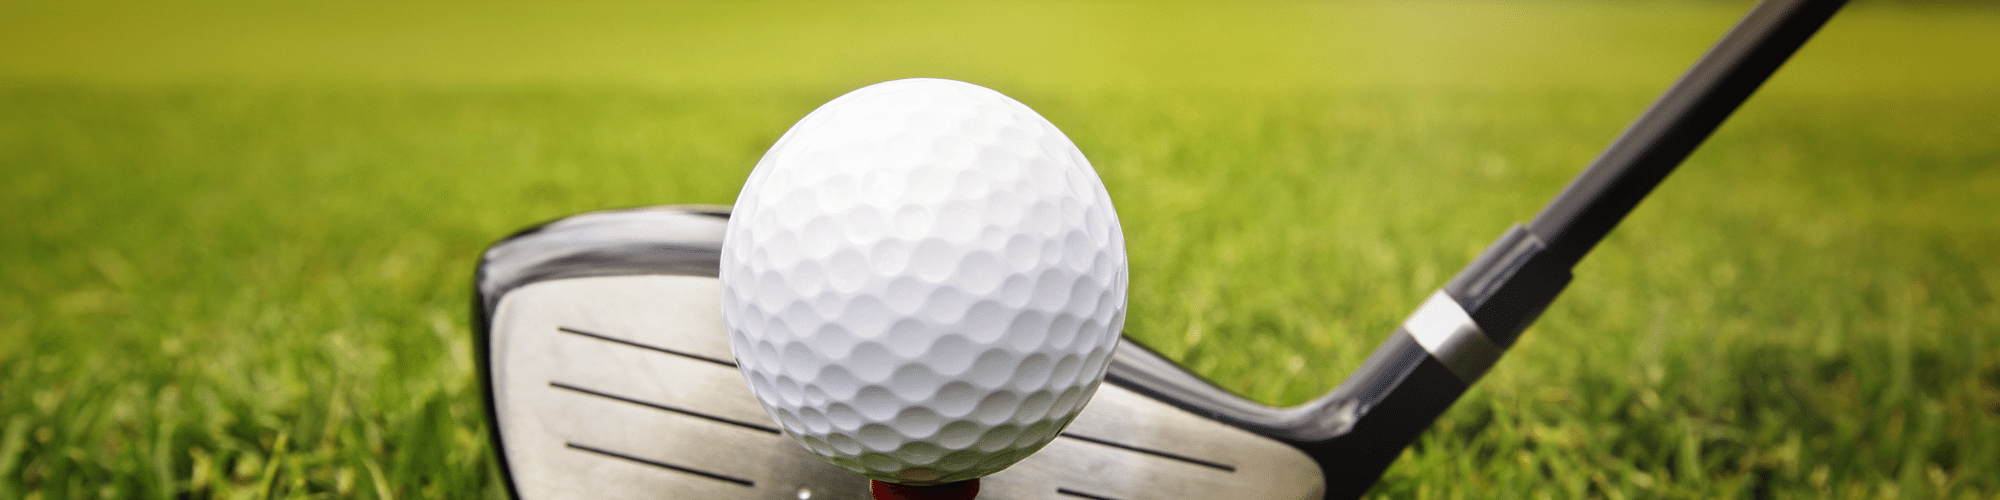 golf ball on a tee with an golf iron on the golf green 